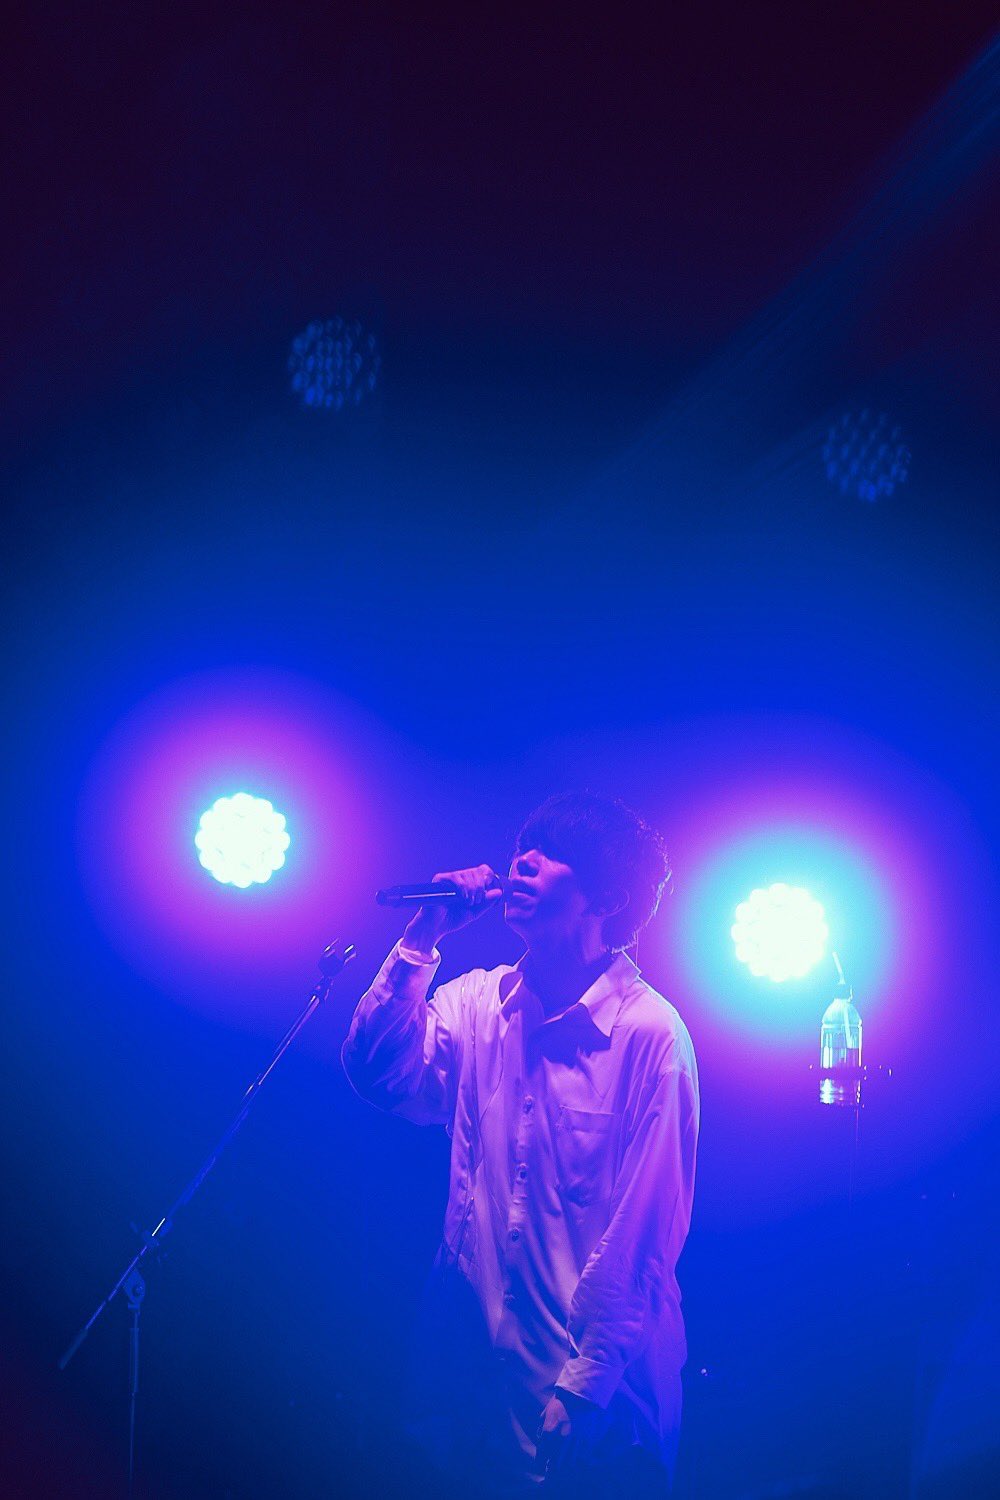 Sumika Sumika Live Tour 22 花鳥風月 第二幕 2月6日 Blue Live Hiroshima Day2 今日の全てを置いてきました また一つギアを上げることが出来ました ありがとうございました Sumika 花鳥風月 花鳥風月第二幕 撮影 後藤壮太郎